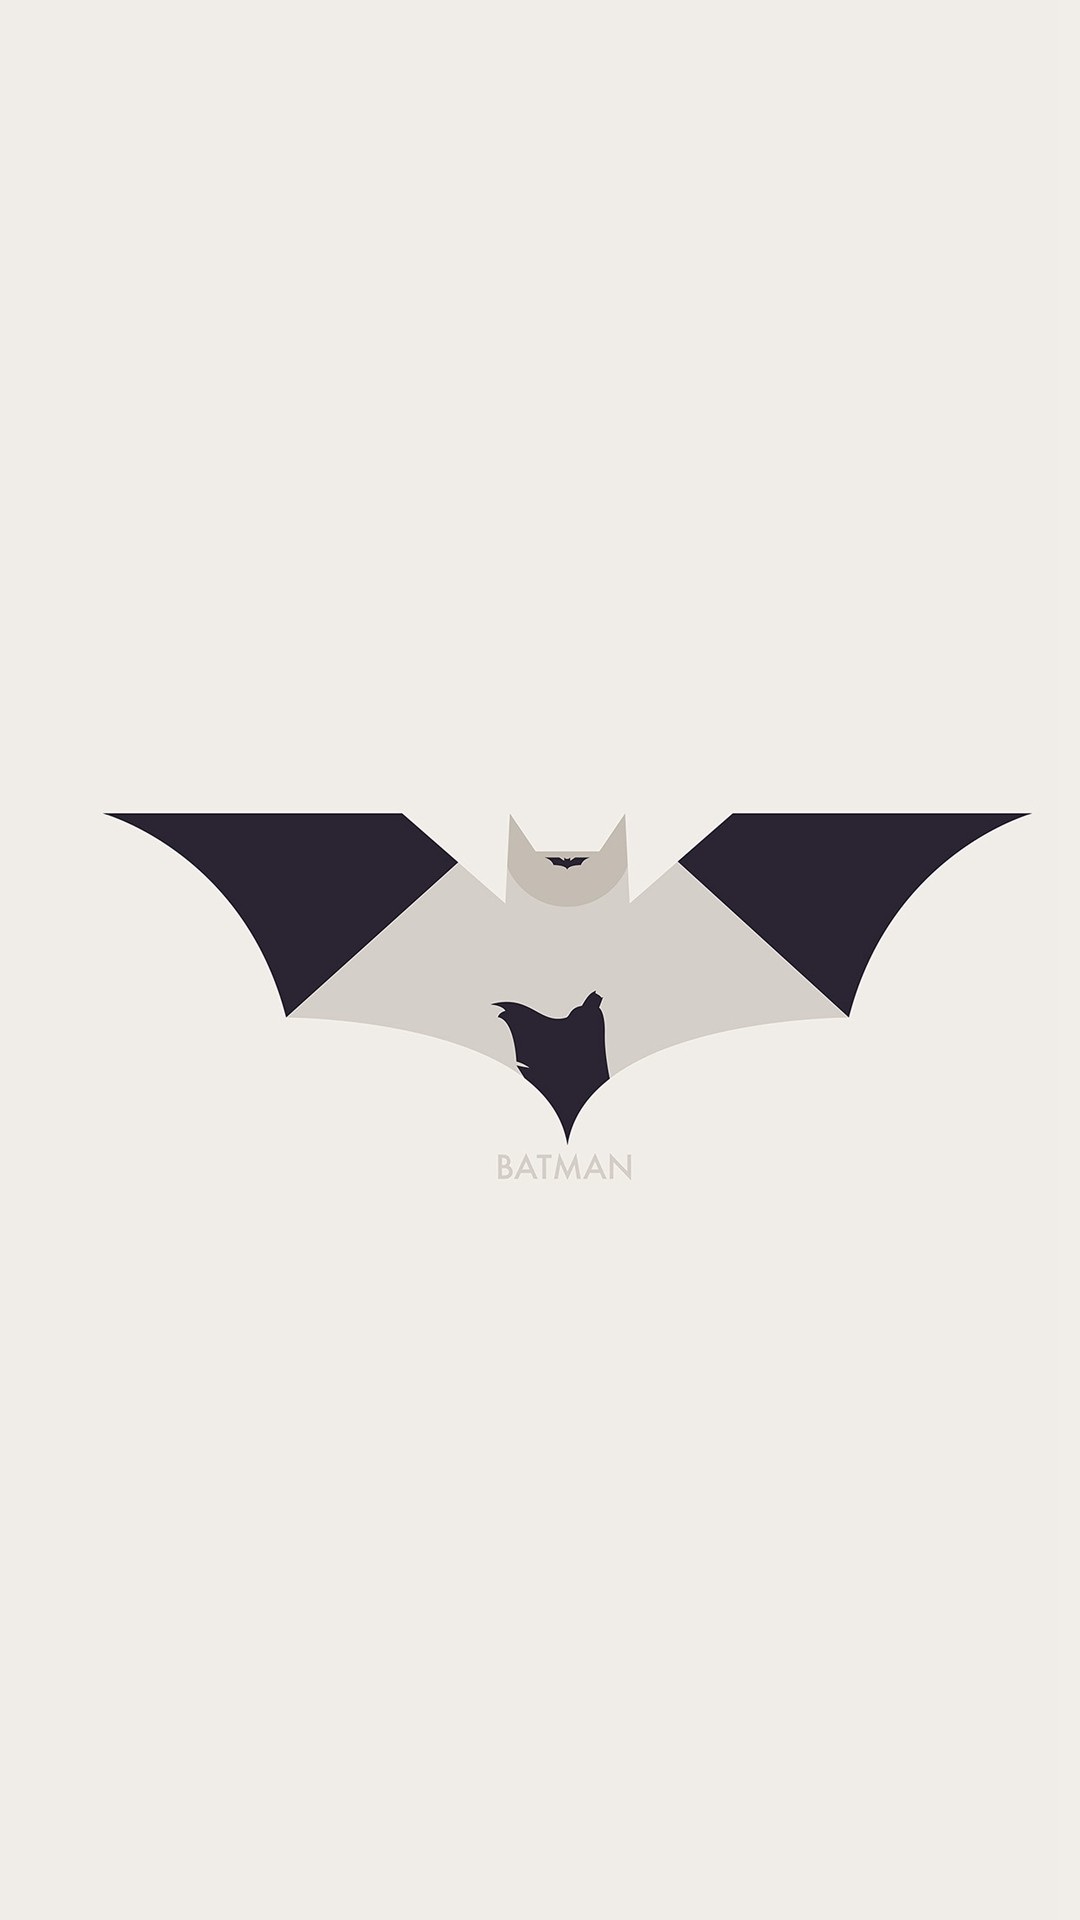 1080x1920 Art Batman Minimal Logo Illust iphone 6 wallpaper.